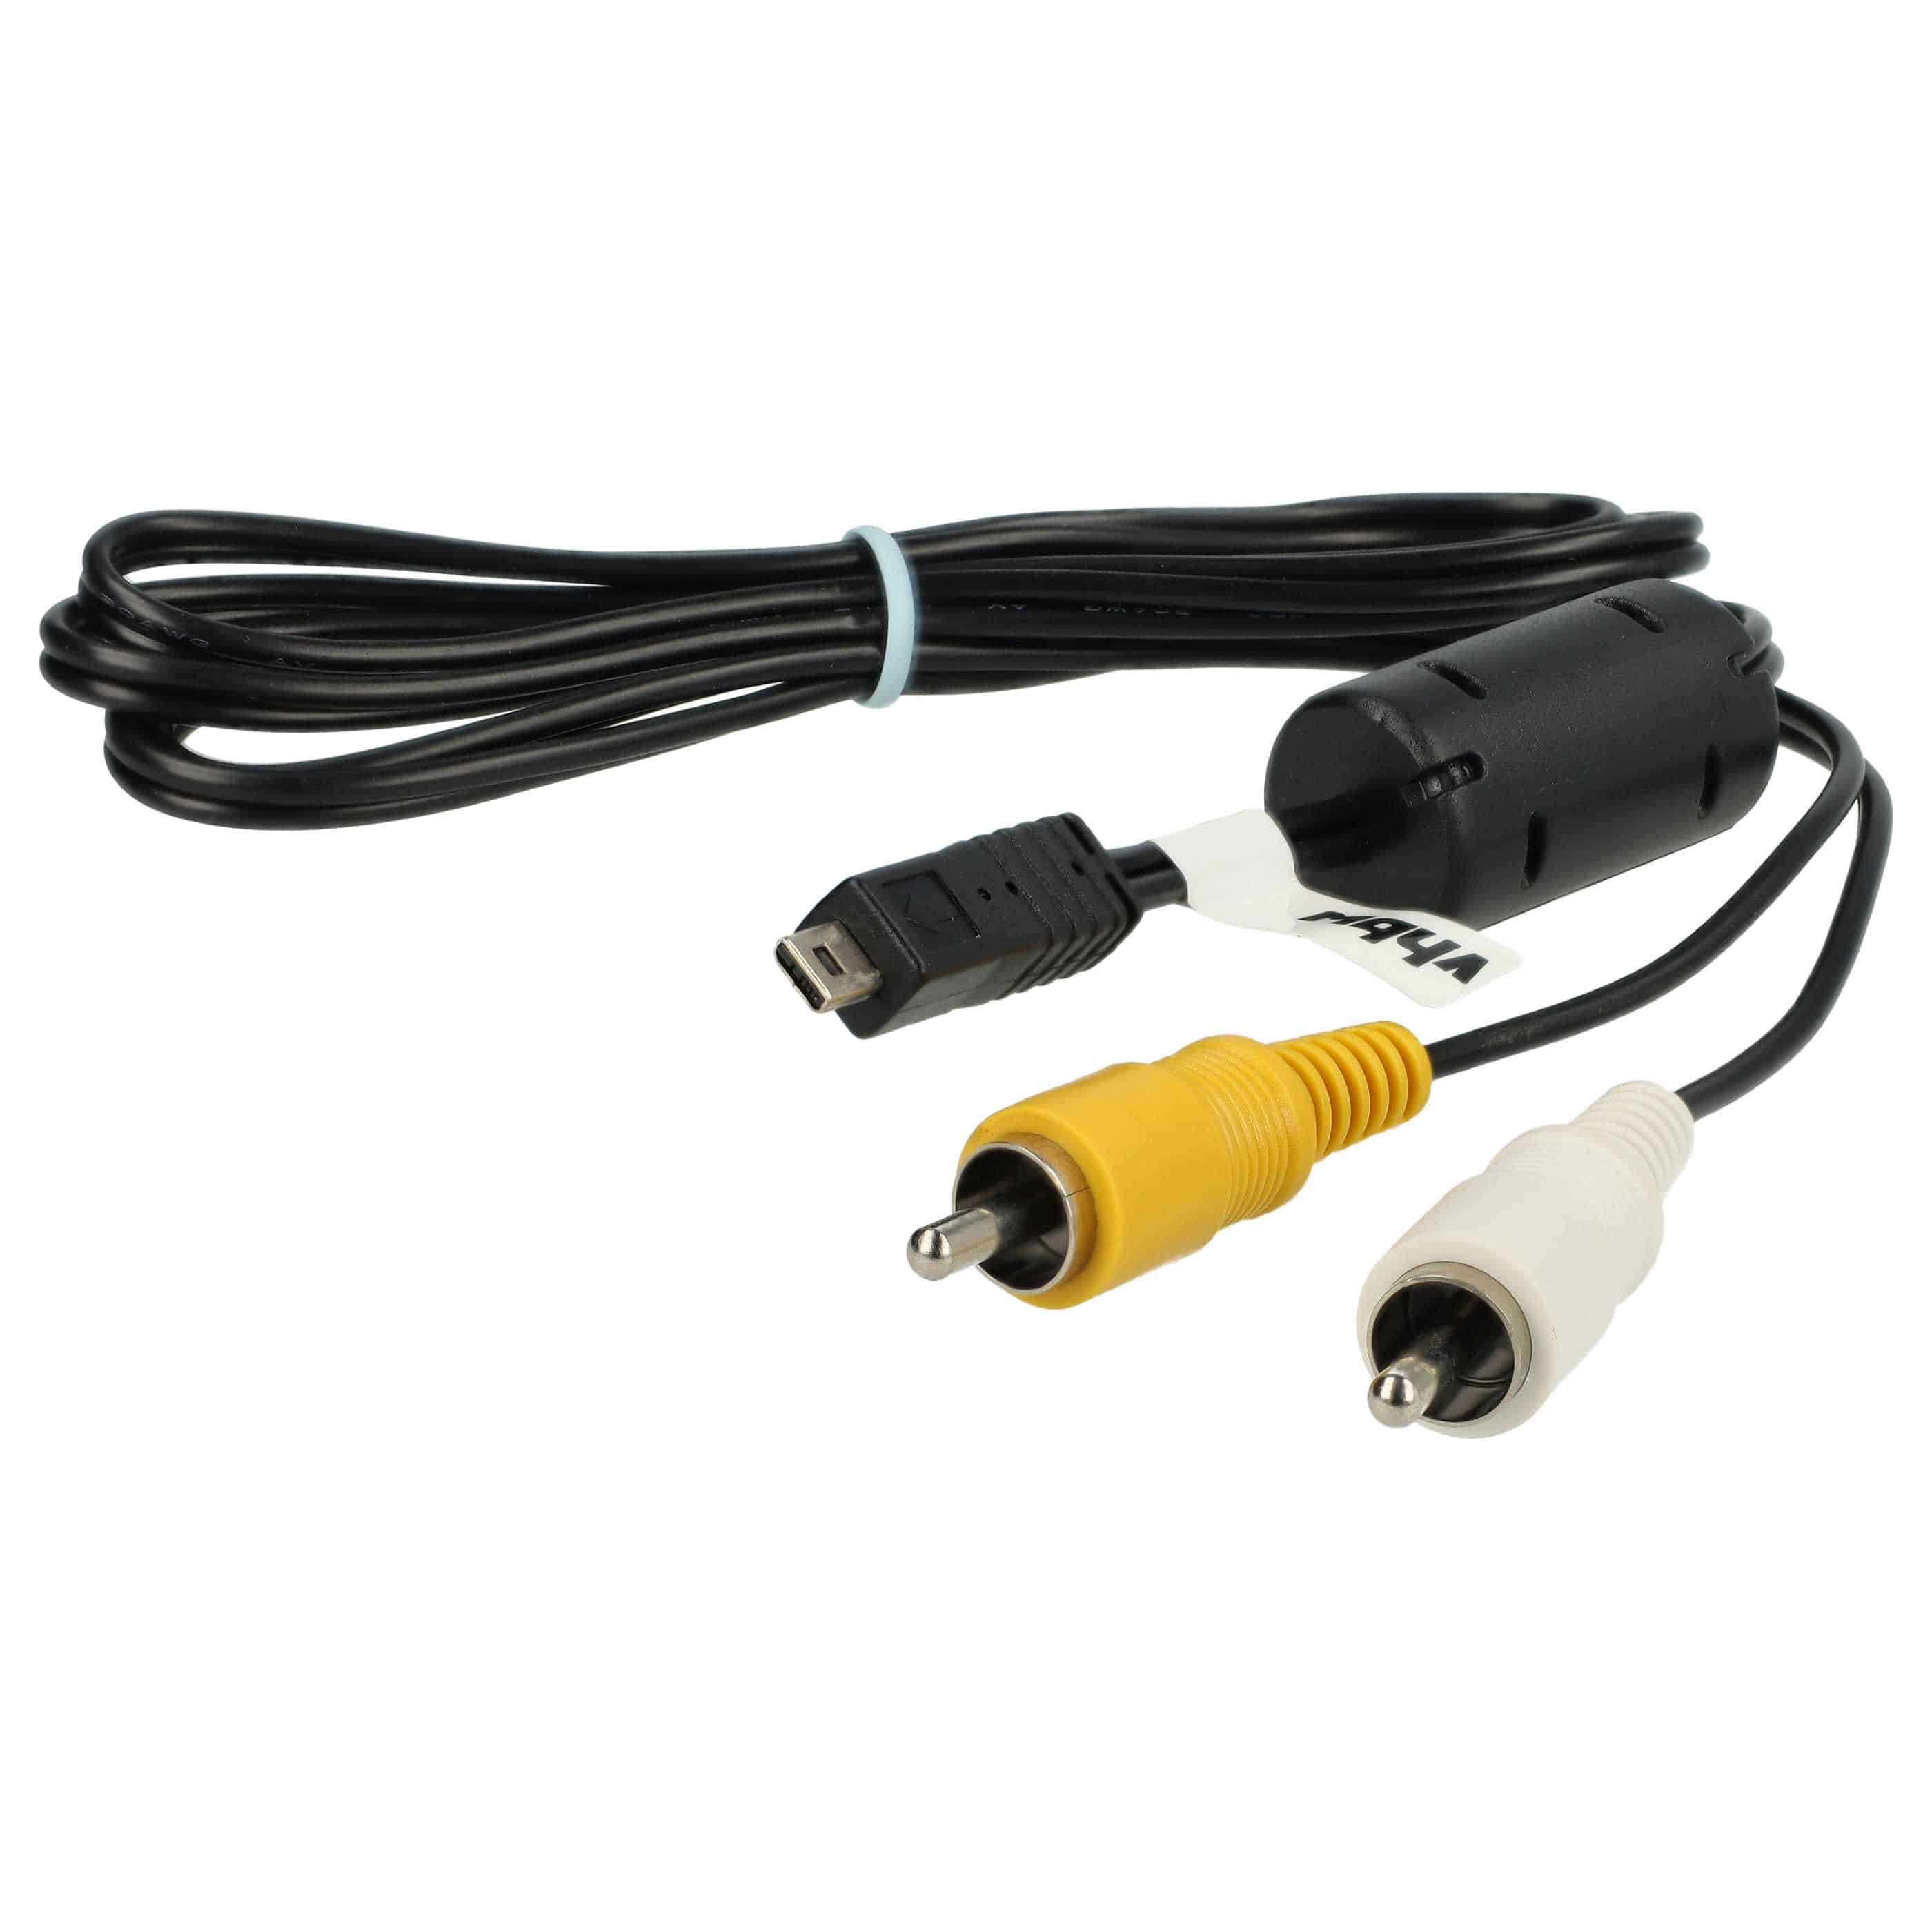 AV Cable replaces Nikon EG-CP14 for Nikon Camera etc. - 150 cm long